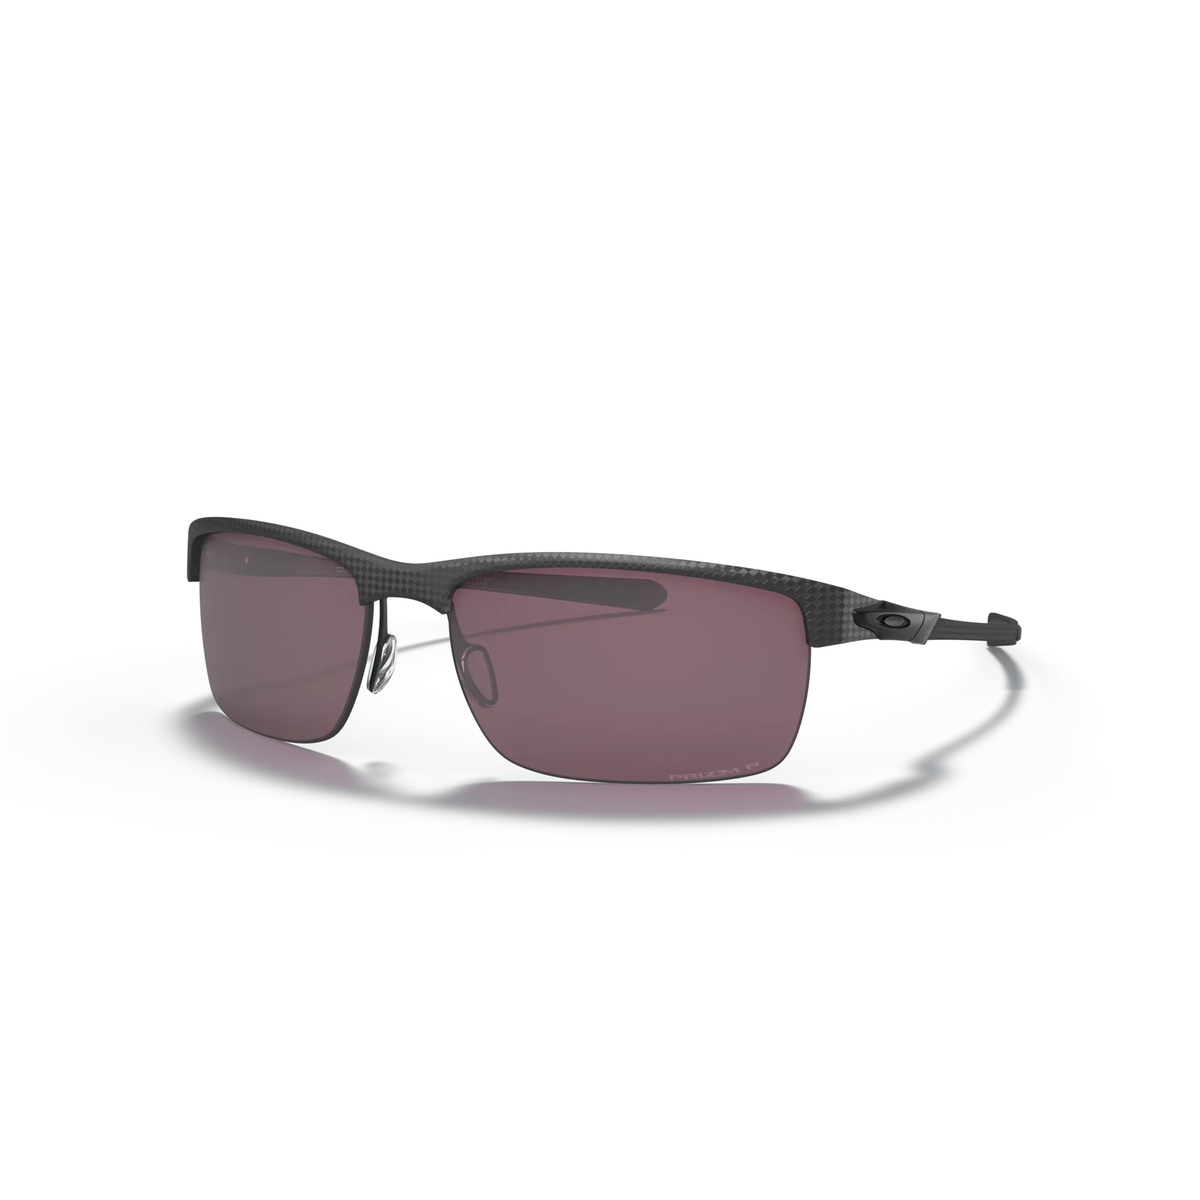 Oakley Carbon Blade Sunglasses